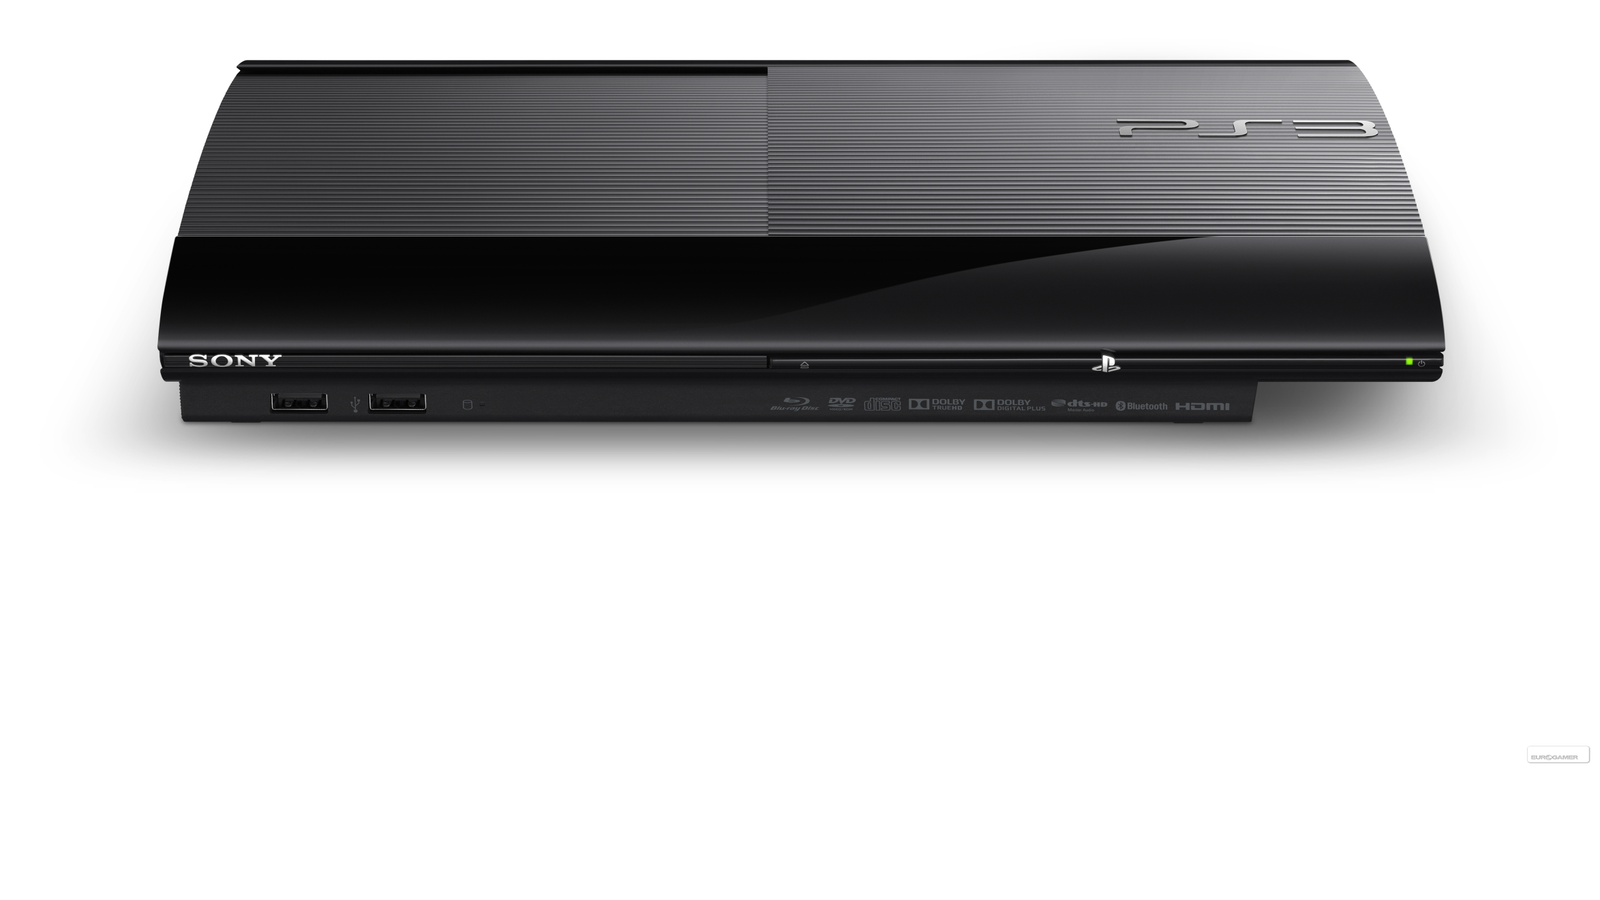 PlayStation 3 Slim 500 GB with Unlimited Games. - Games N Gadget